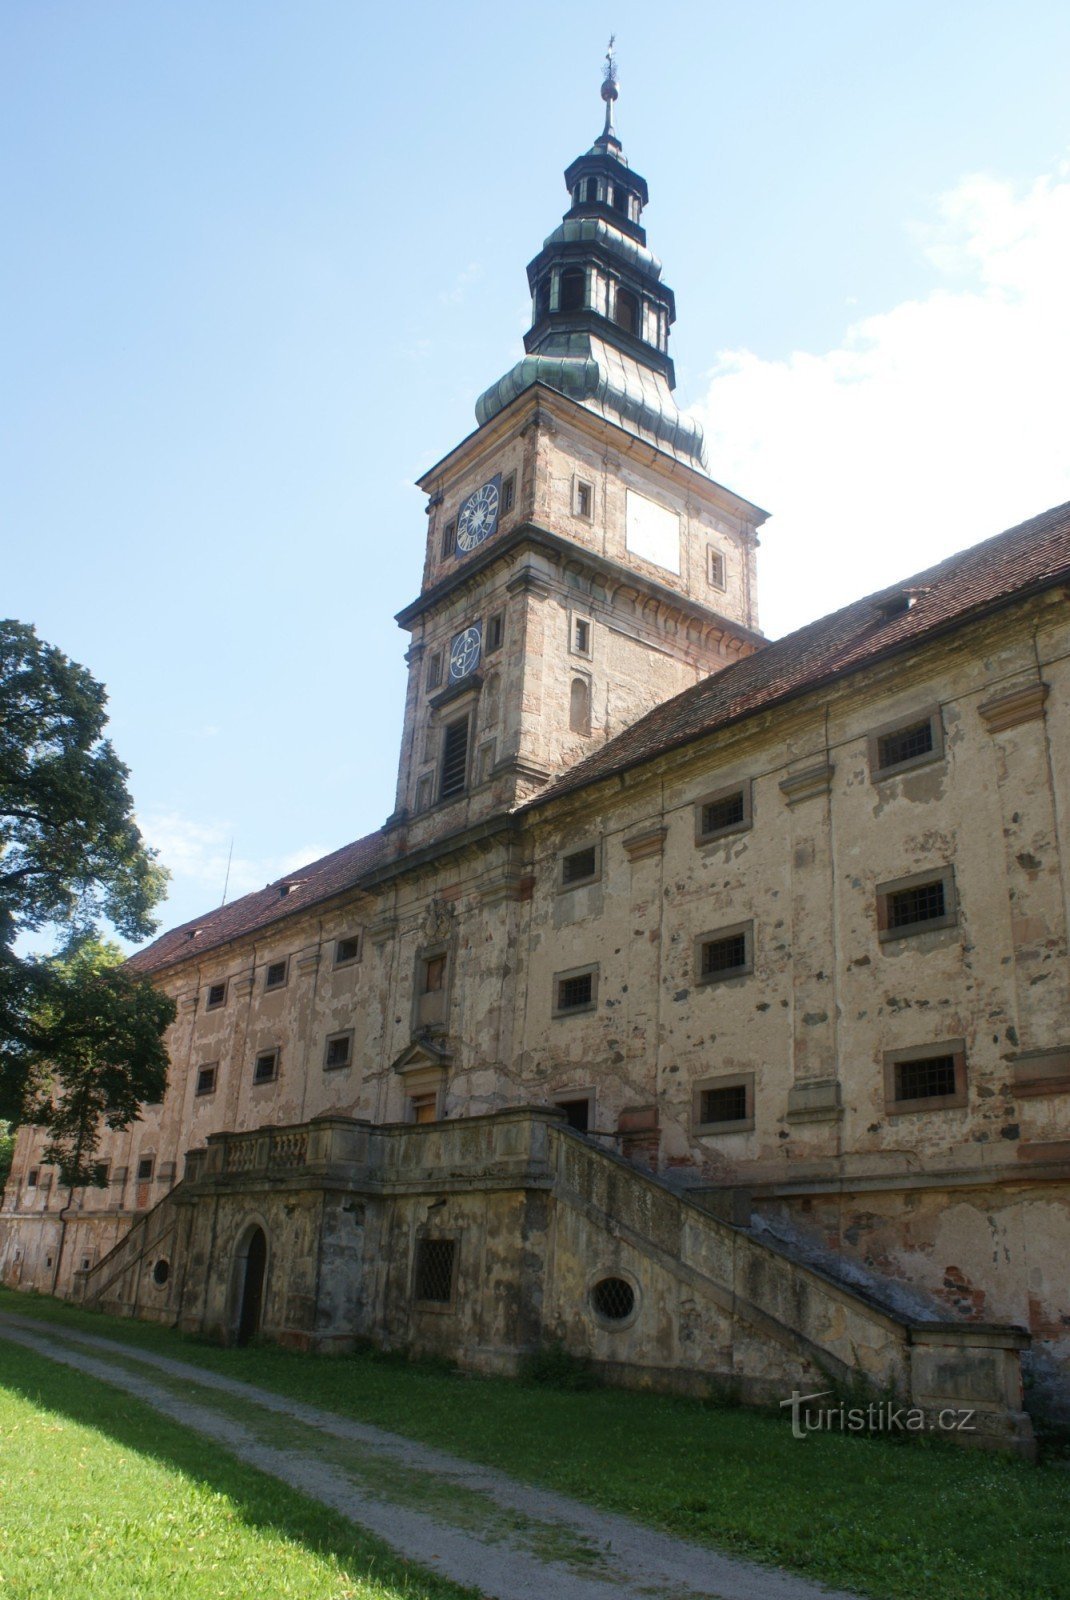 Пласький монастир – зерносховище в стилі бароко з каплицею та вежею з годинником